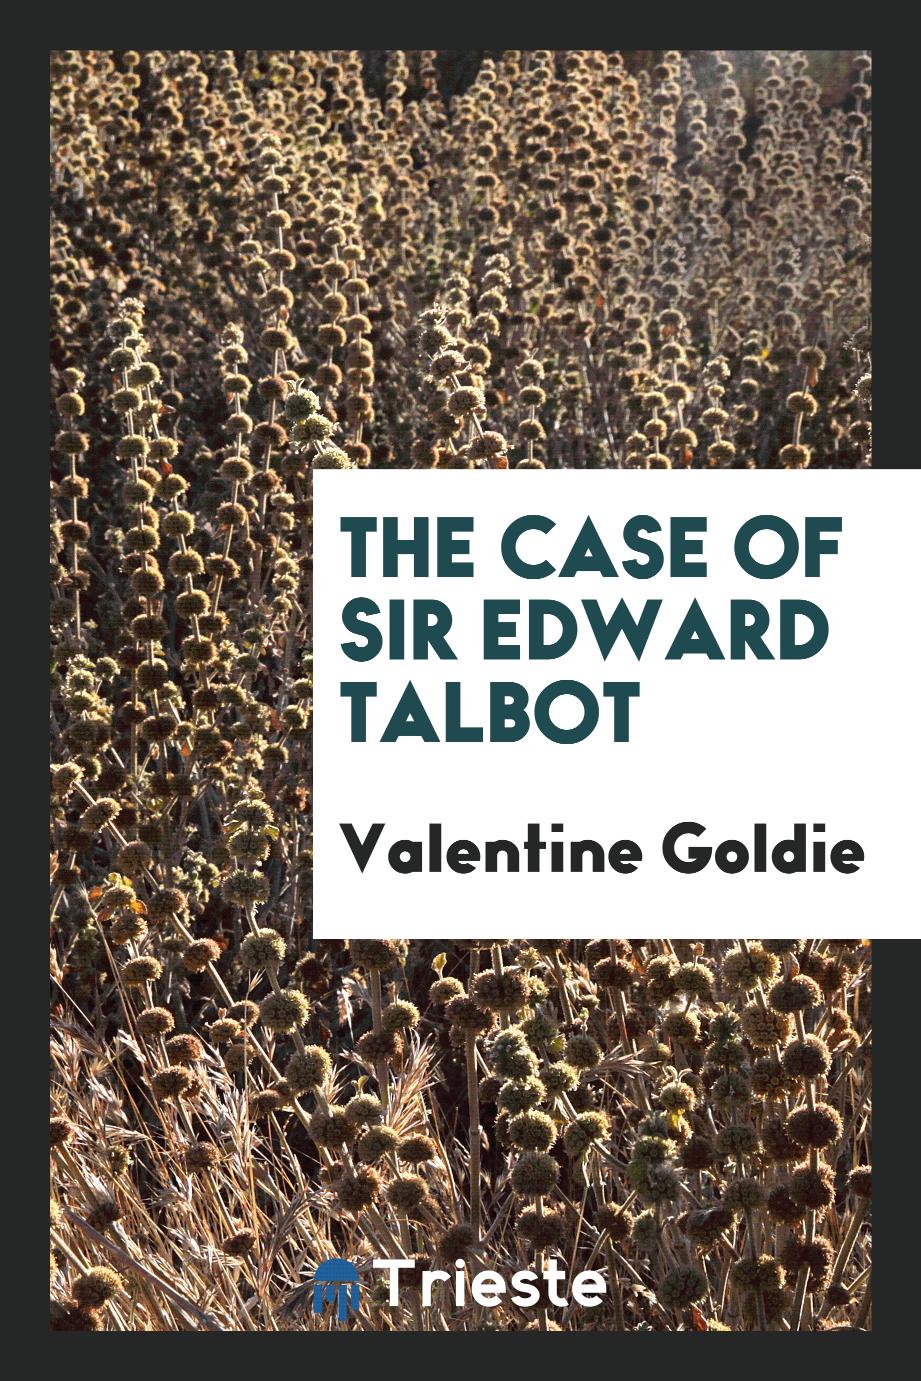 The case of Sir Edward Talbot